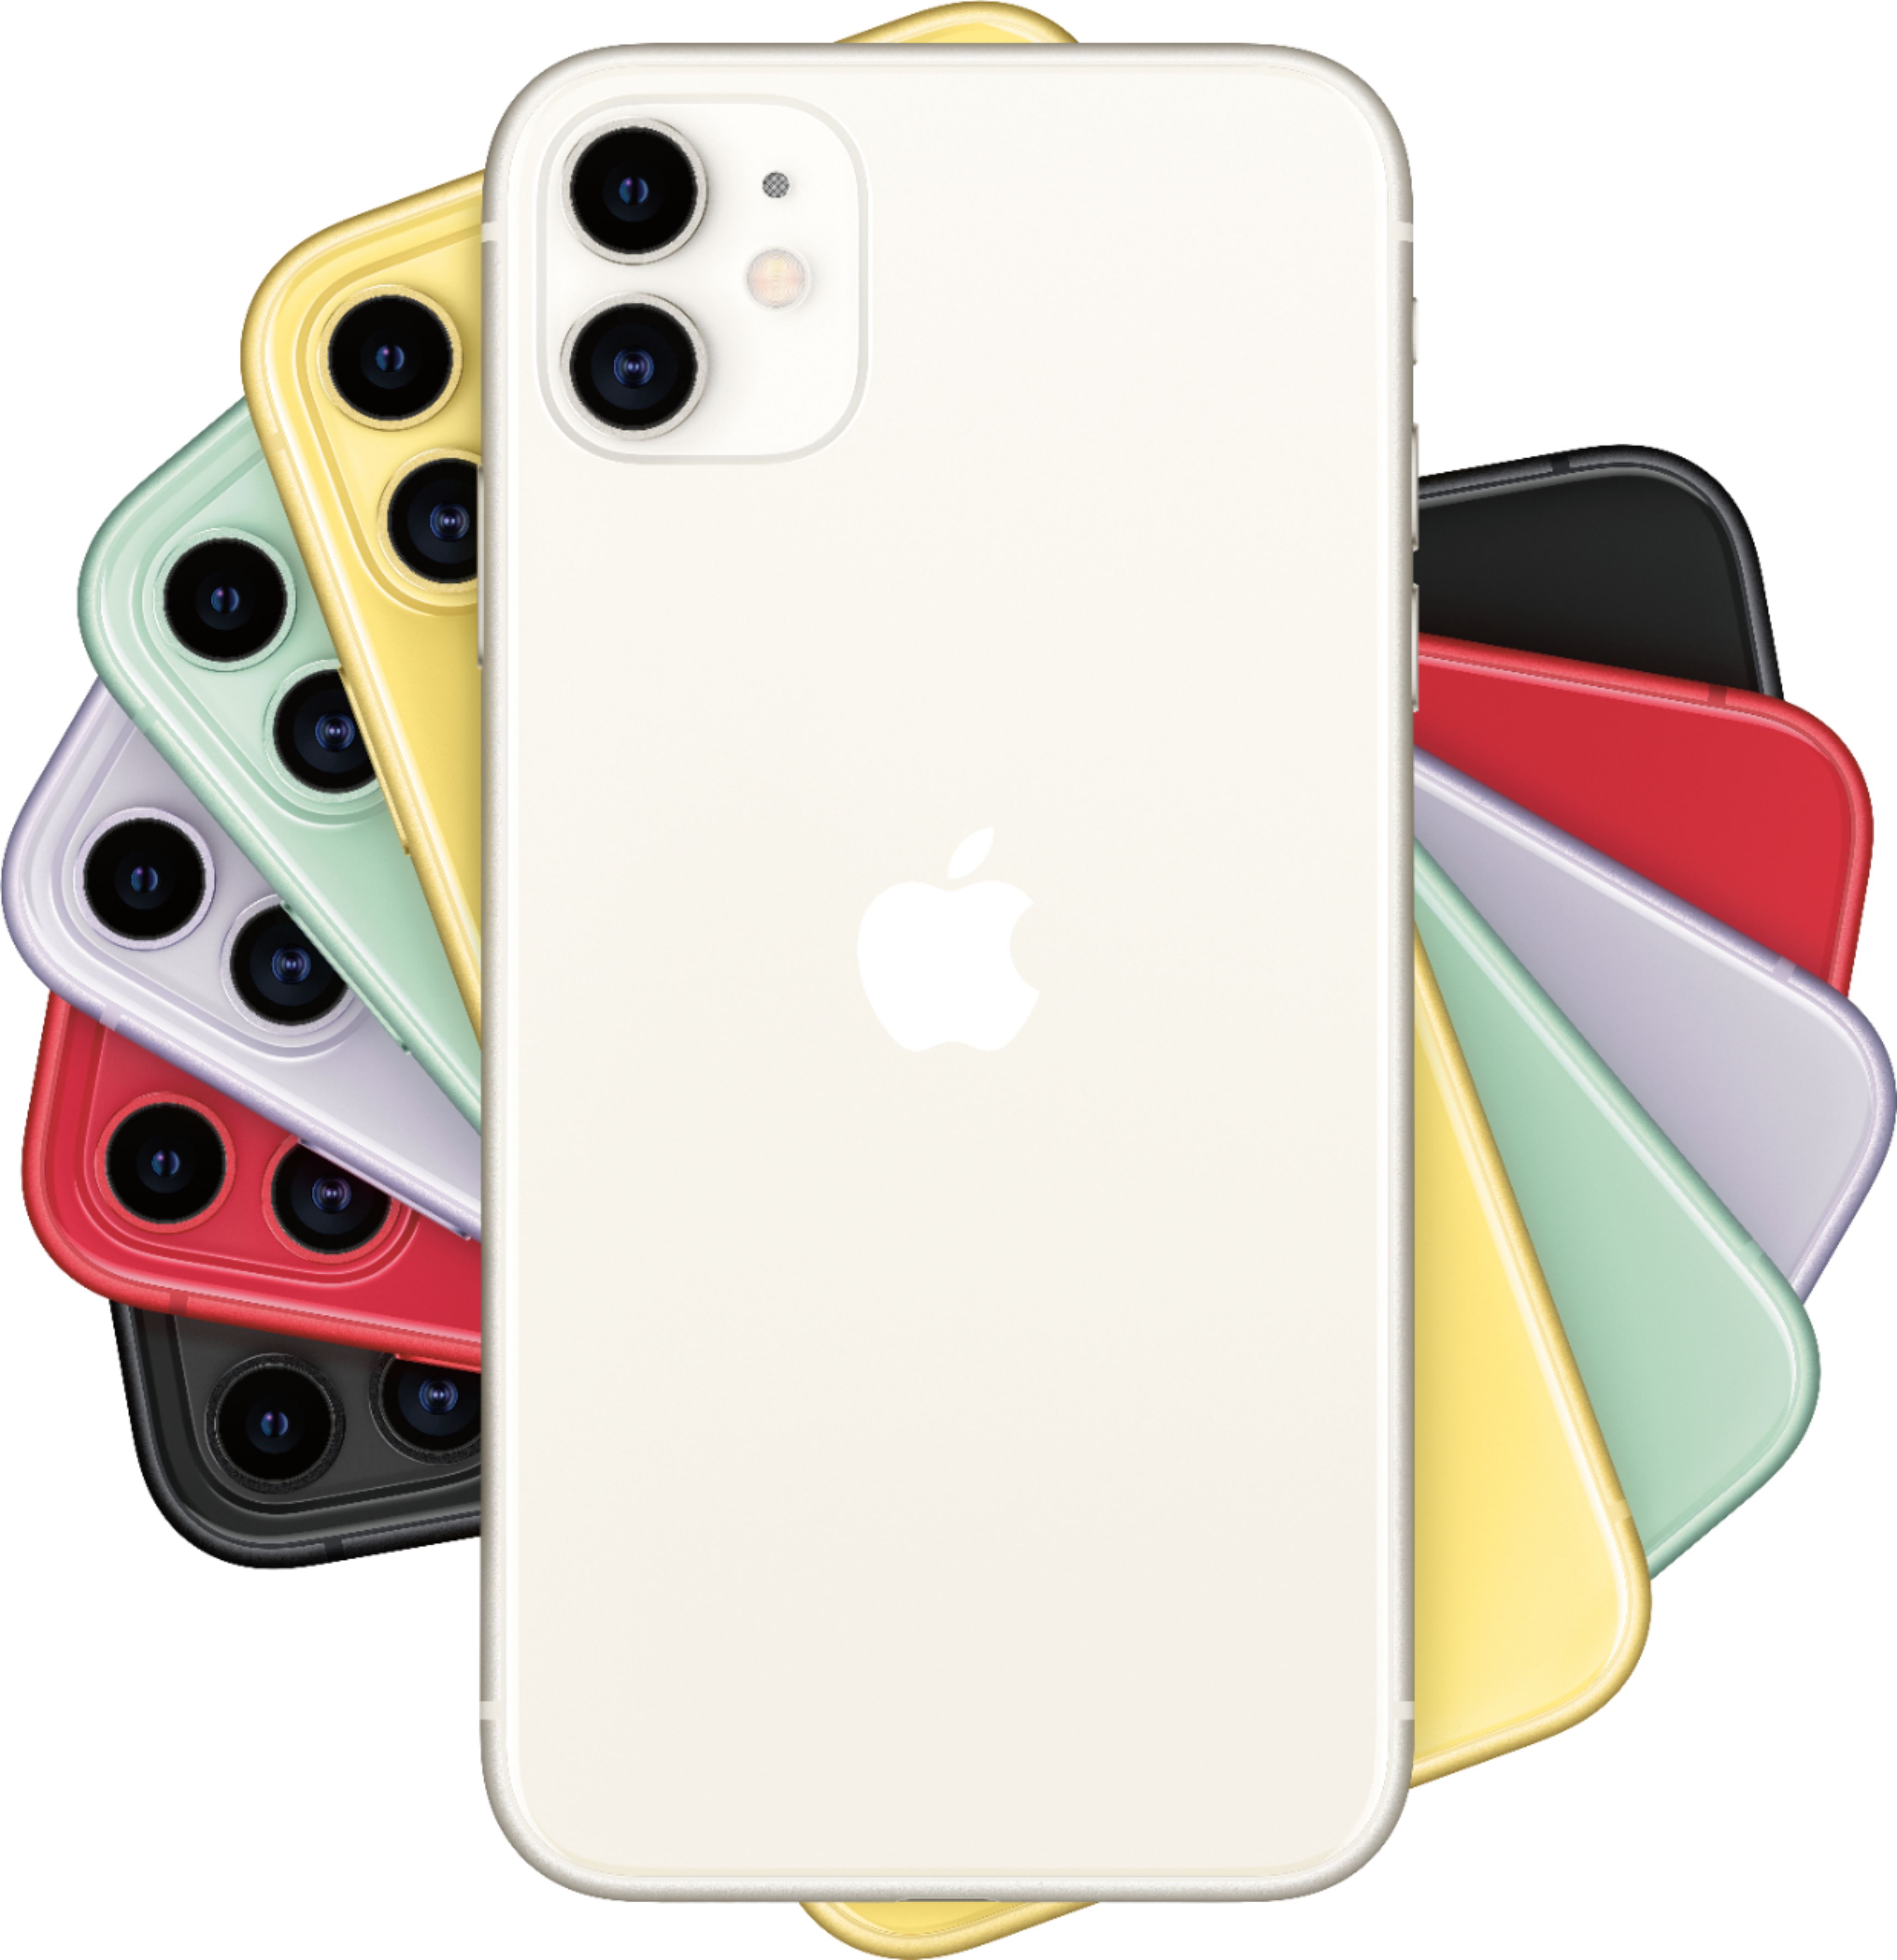 Customer Reviews: Apple iPhone 11 128GB White (Unlocked) MWKV2LL/A